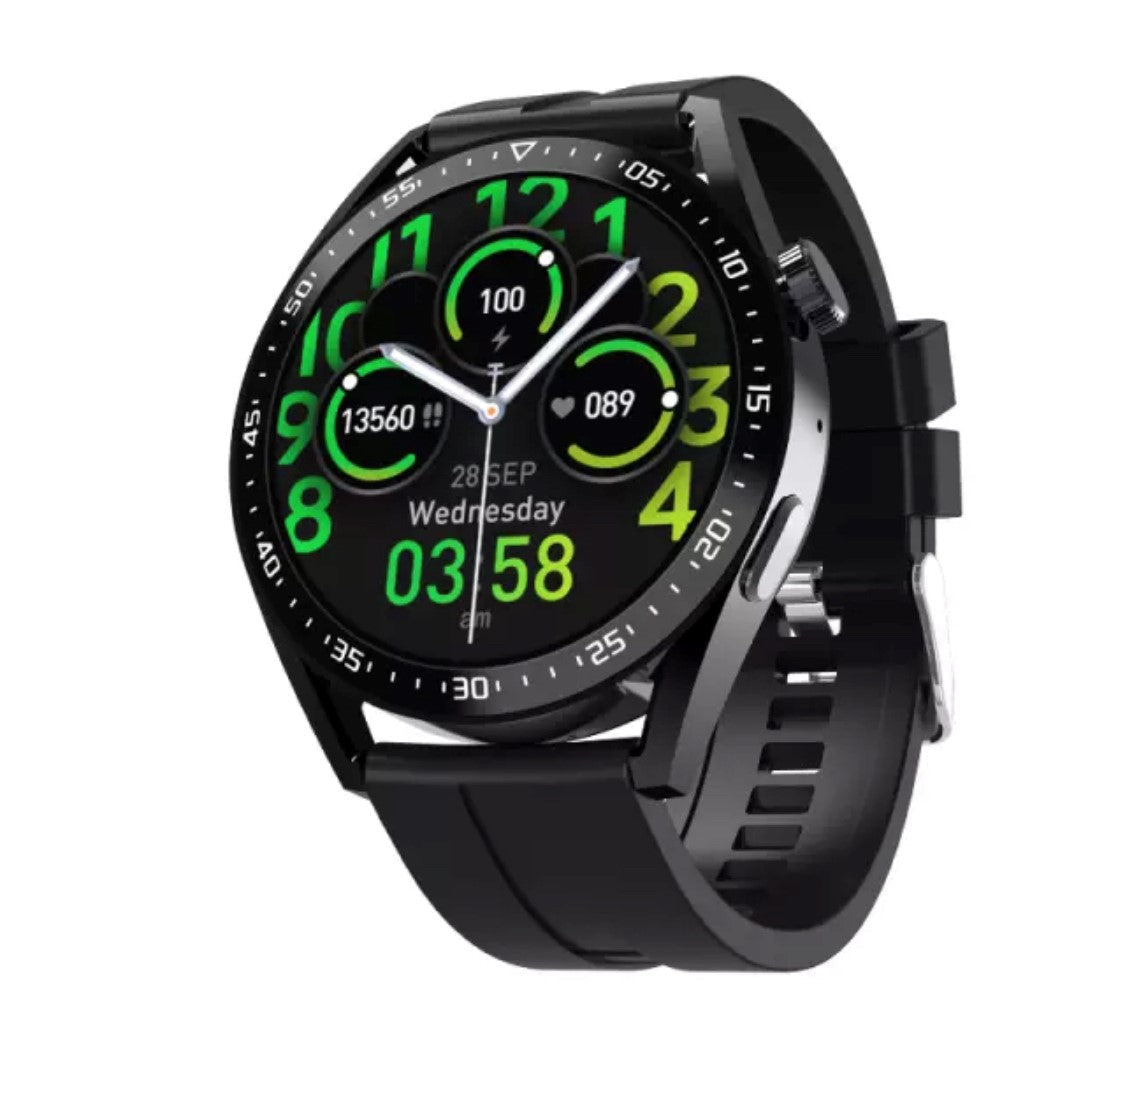 HW28 Smart Watch Brown Tan Smart Watch South Africa